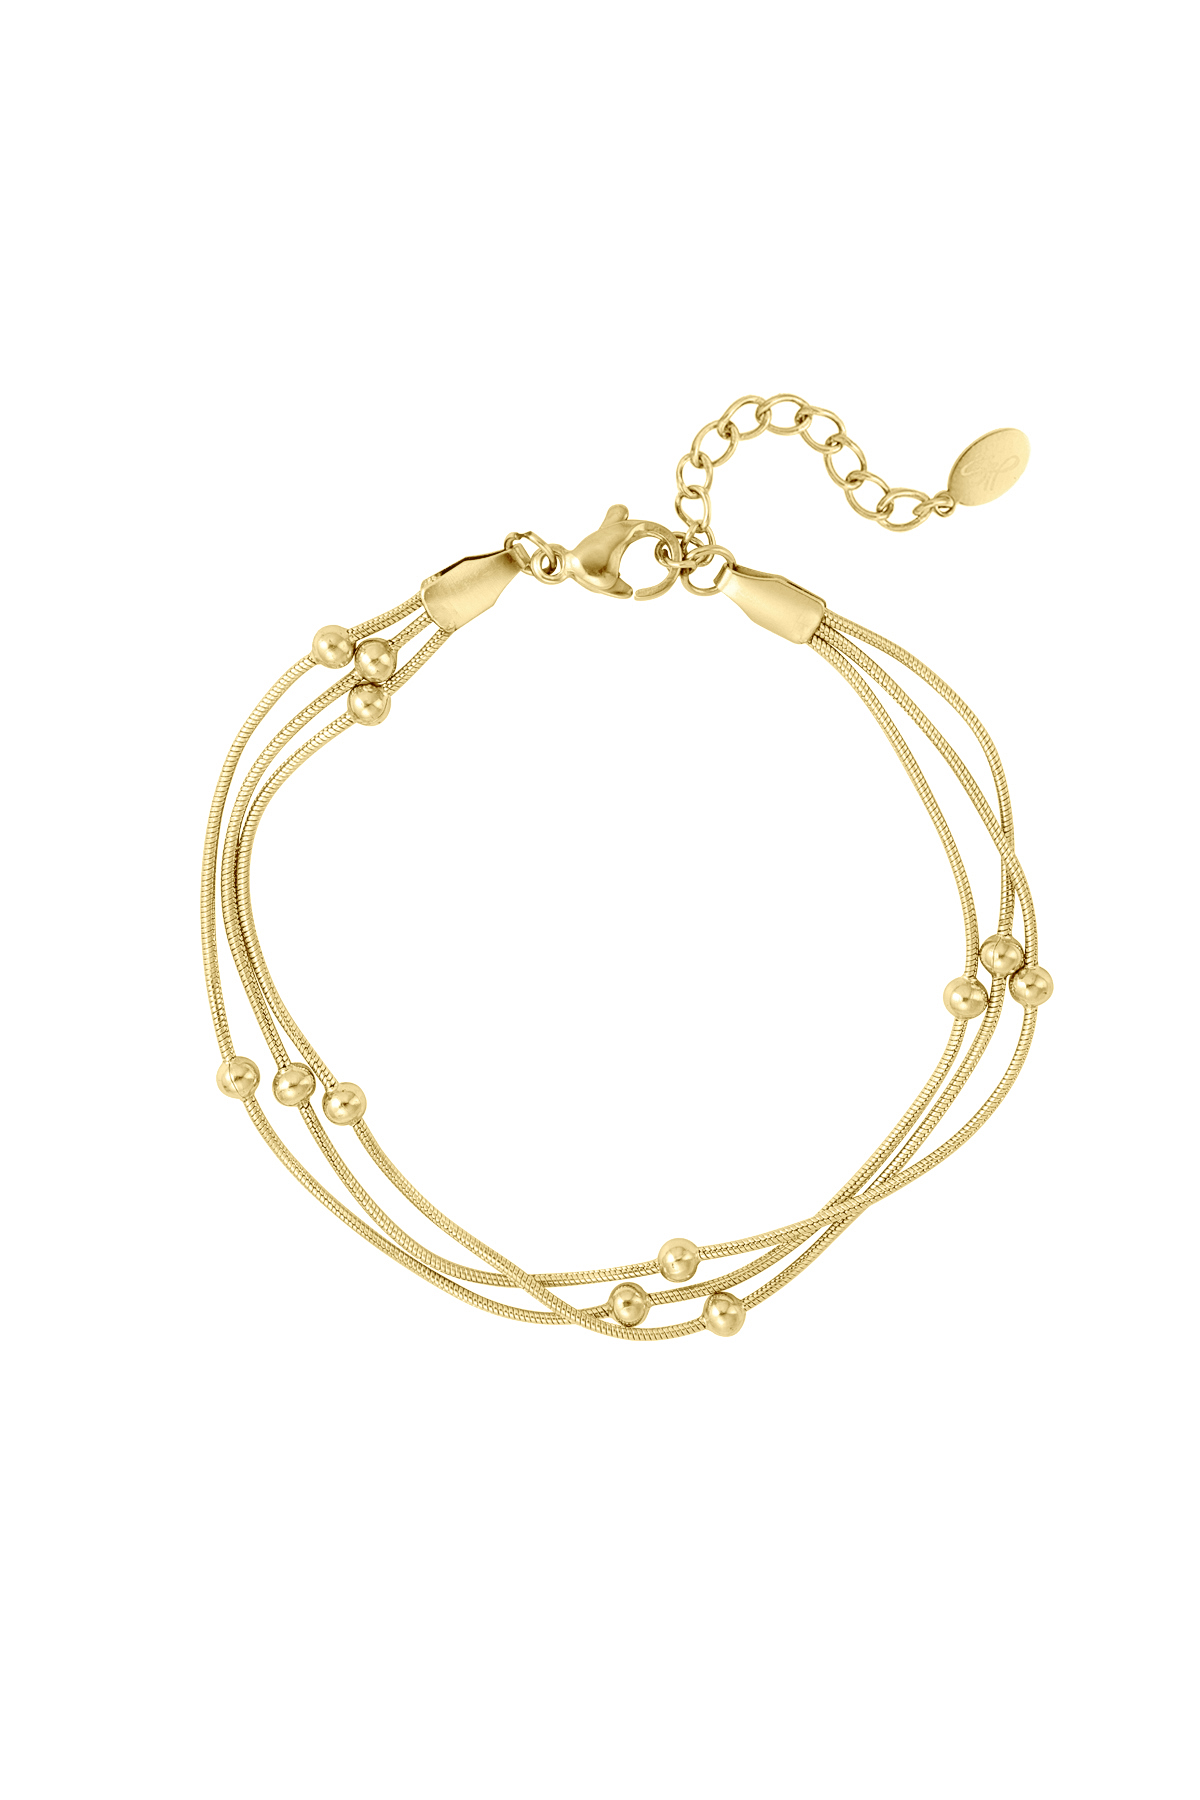 Bracelet with a twist - gold h5 